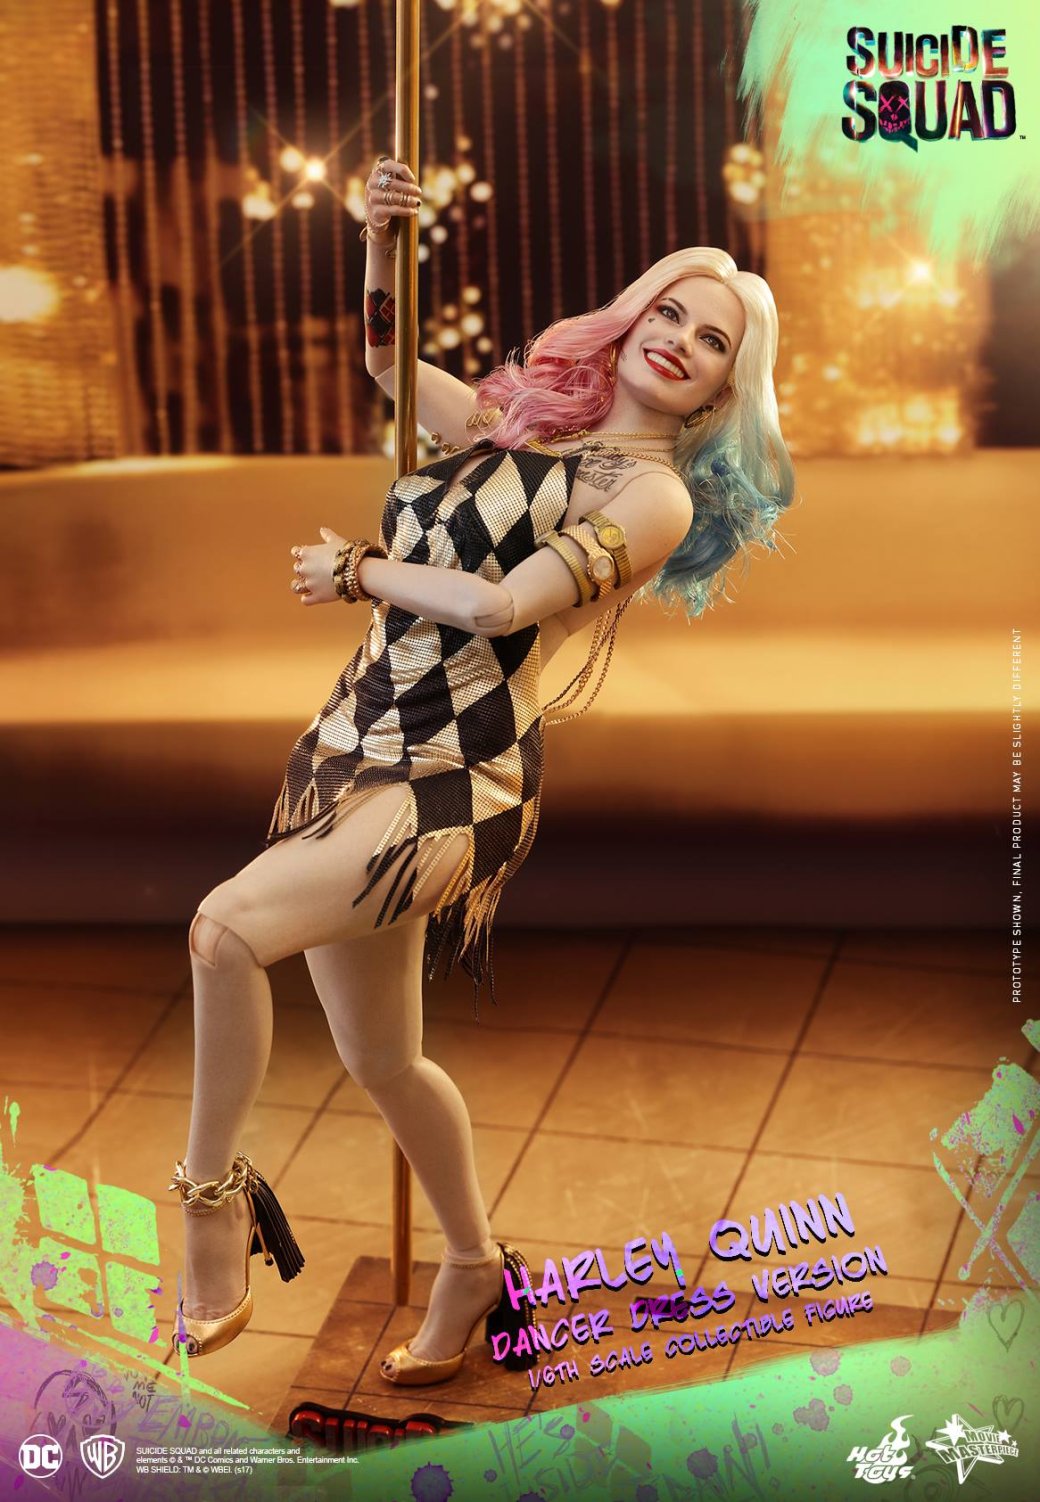 Фигурка Харли Квинн-танцовщицы выглядит как кукла Барби. - Изображение 6